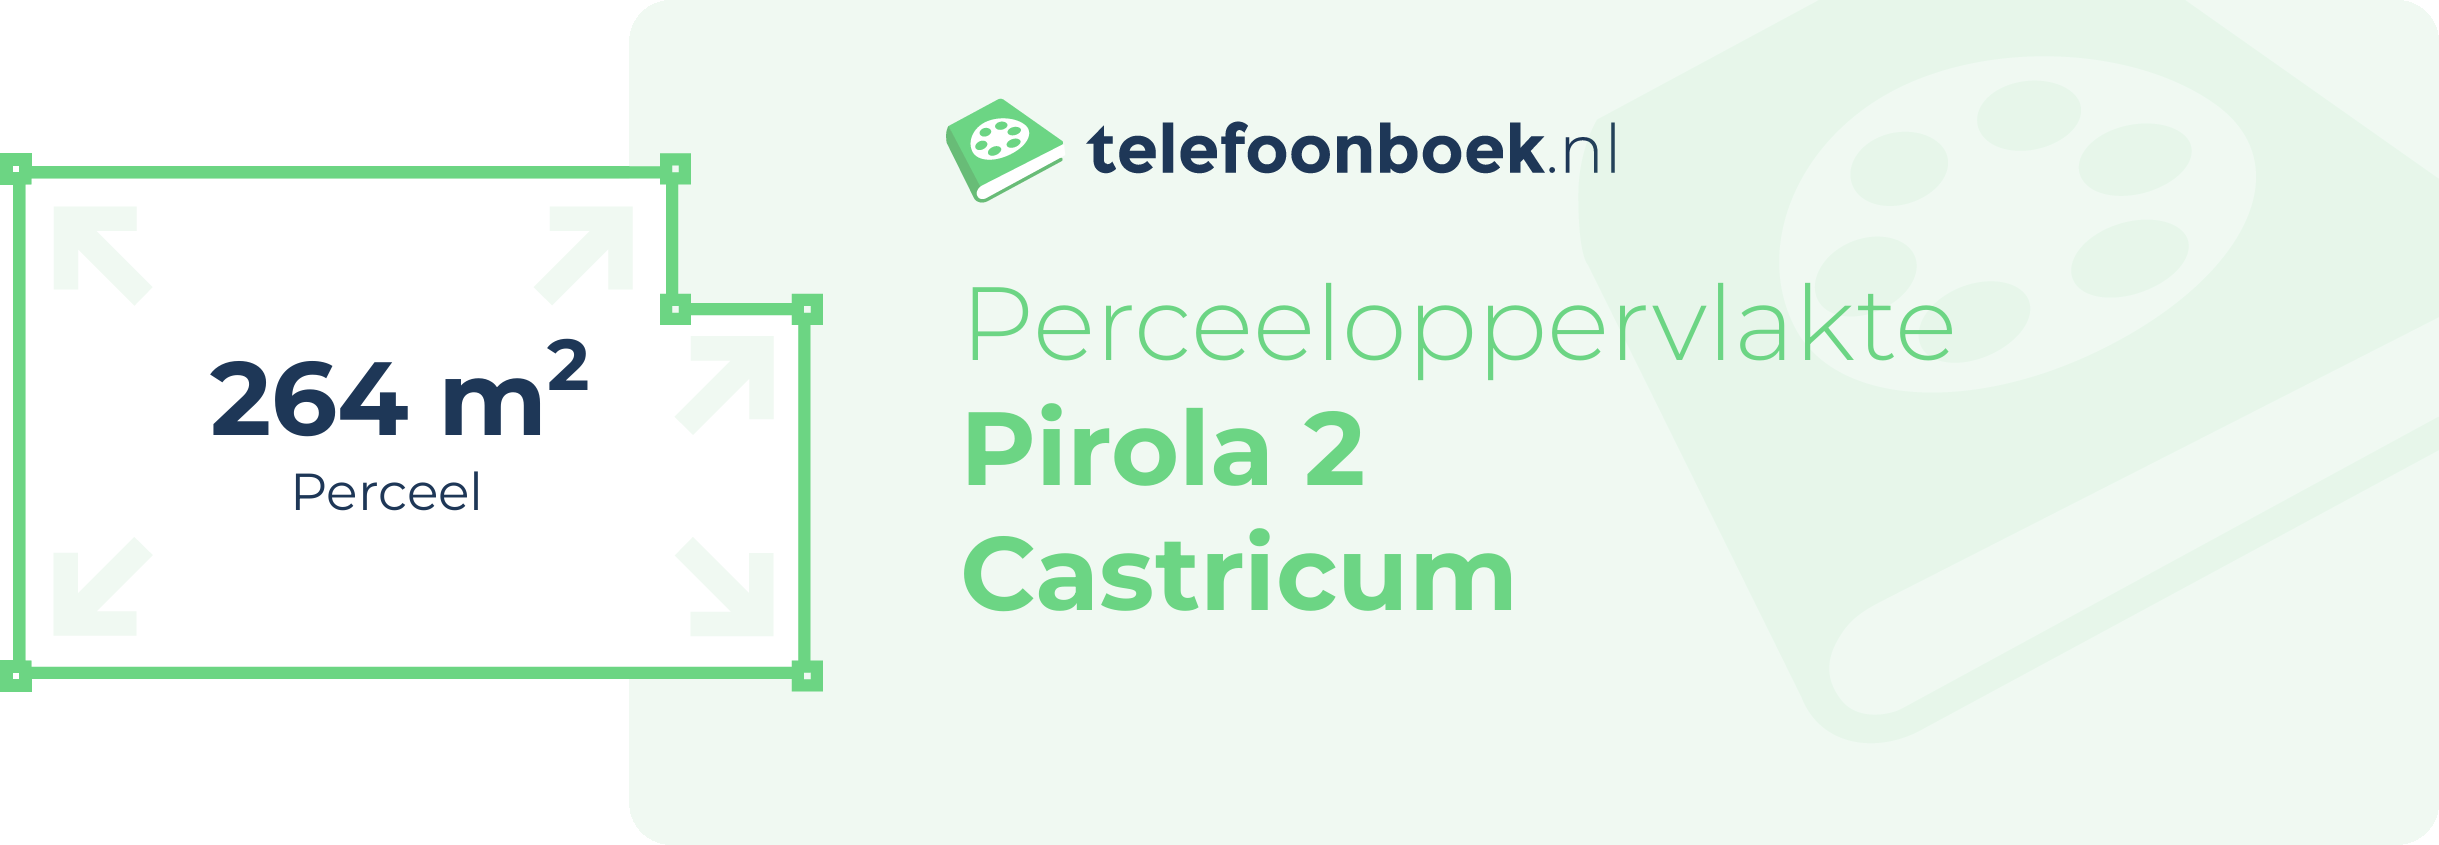 Perceeloppervlakte Pirola 2 Castricum